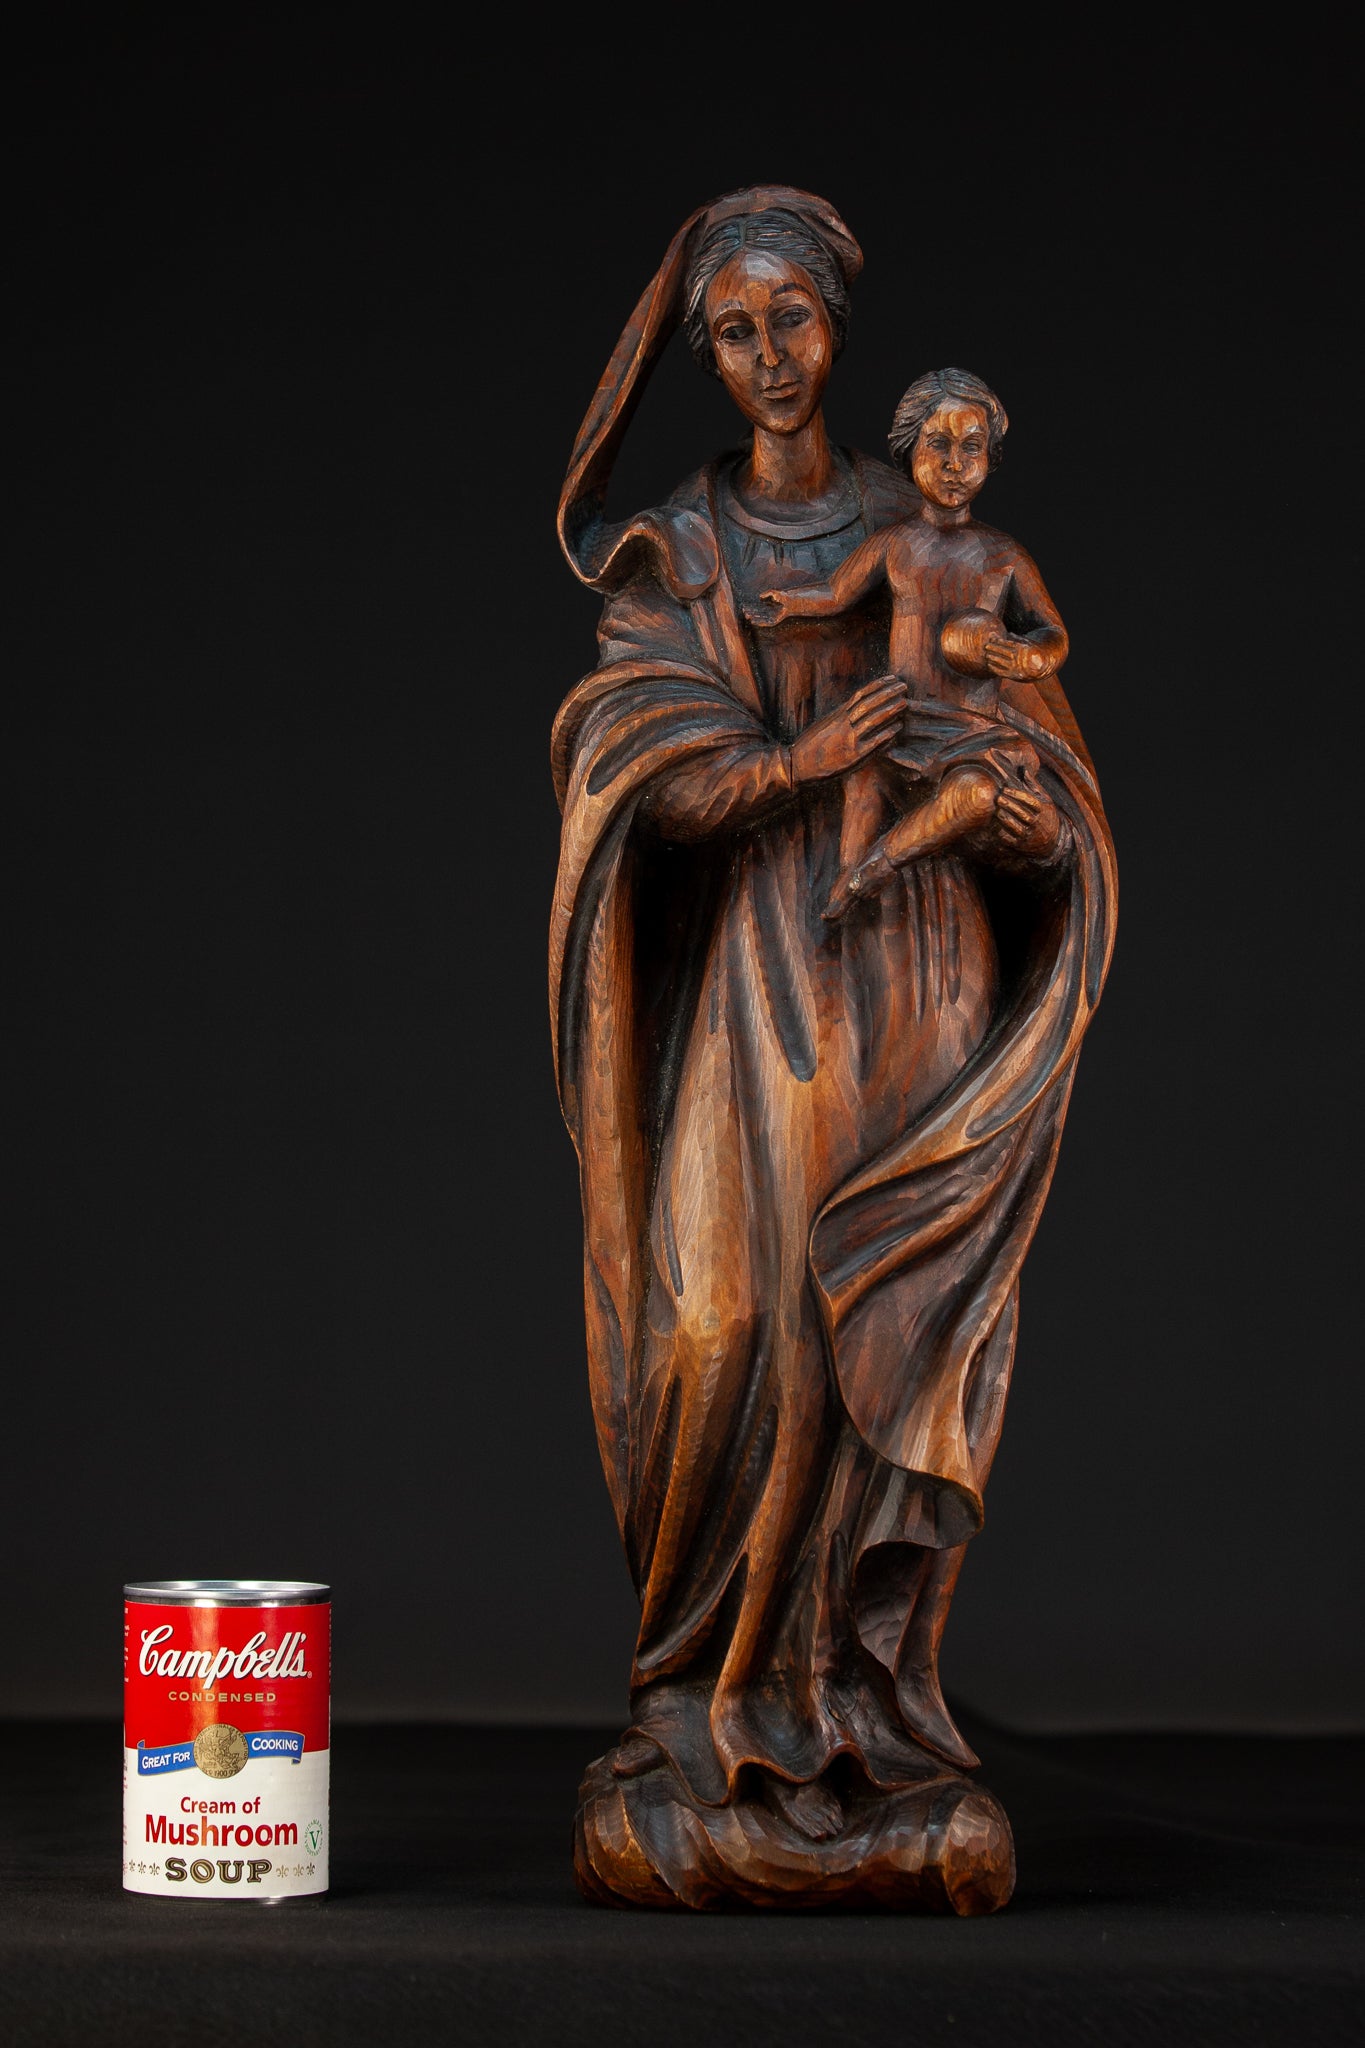 Virgin Mary Child Jesus Wooden Sculpture 22” / 56 cm